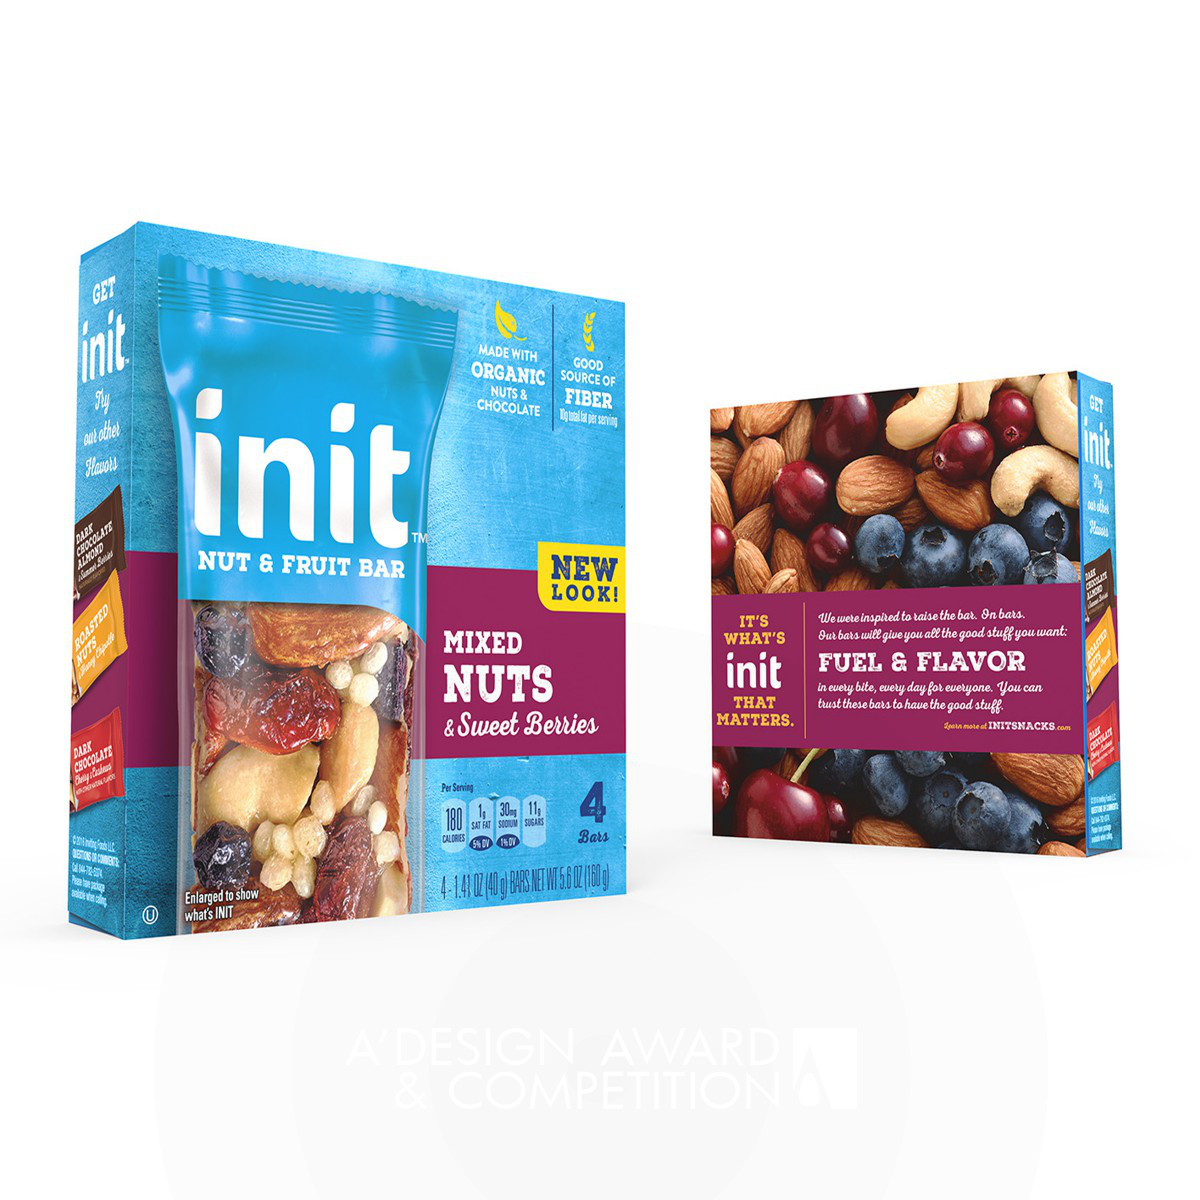 INIT Fruit & Nut Bar Snack Bar by PepsiCo Design & Innovation